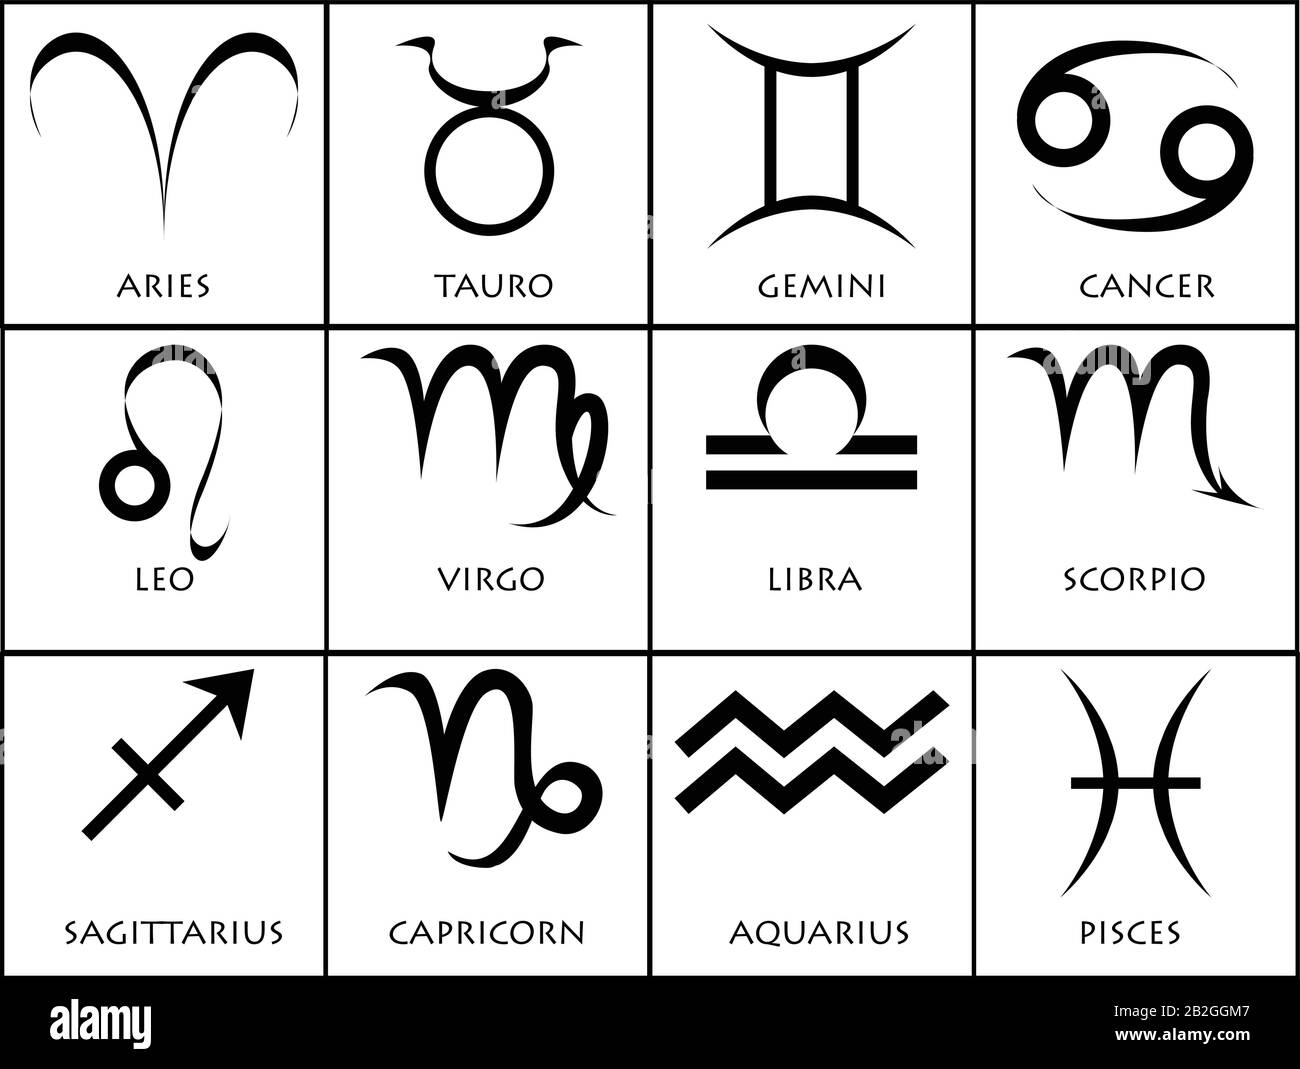 Vector image set of all greek zodiac sign symbols. Stock Vector